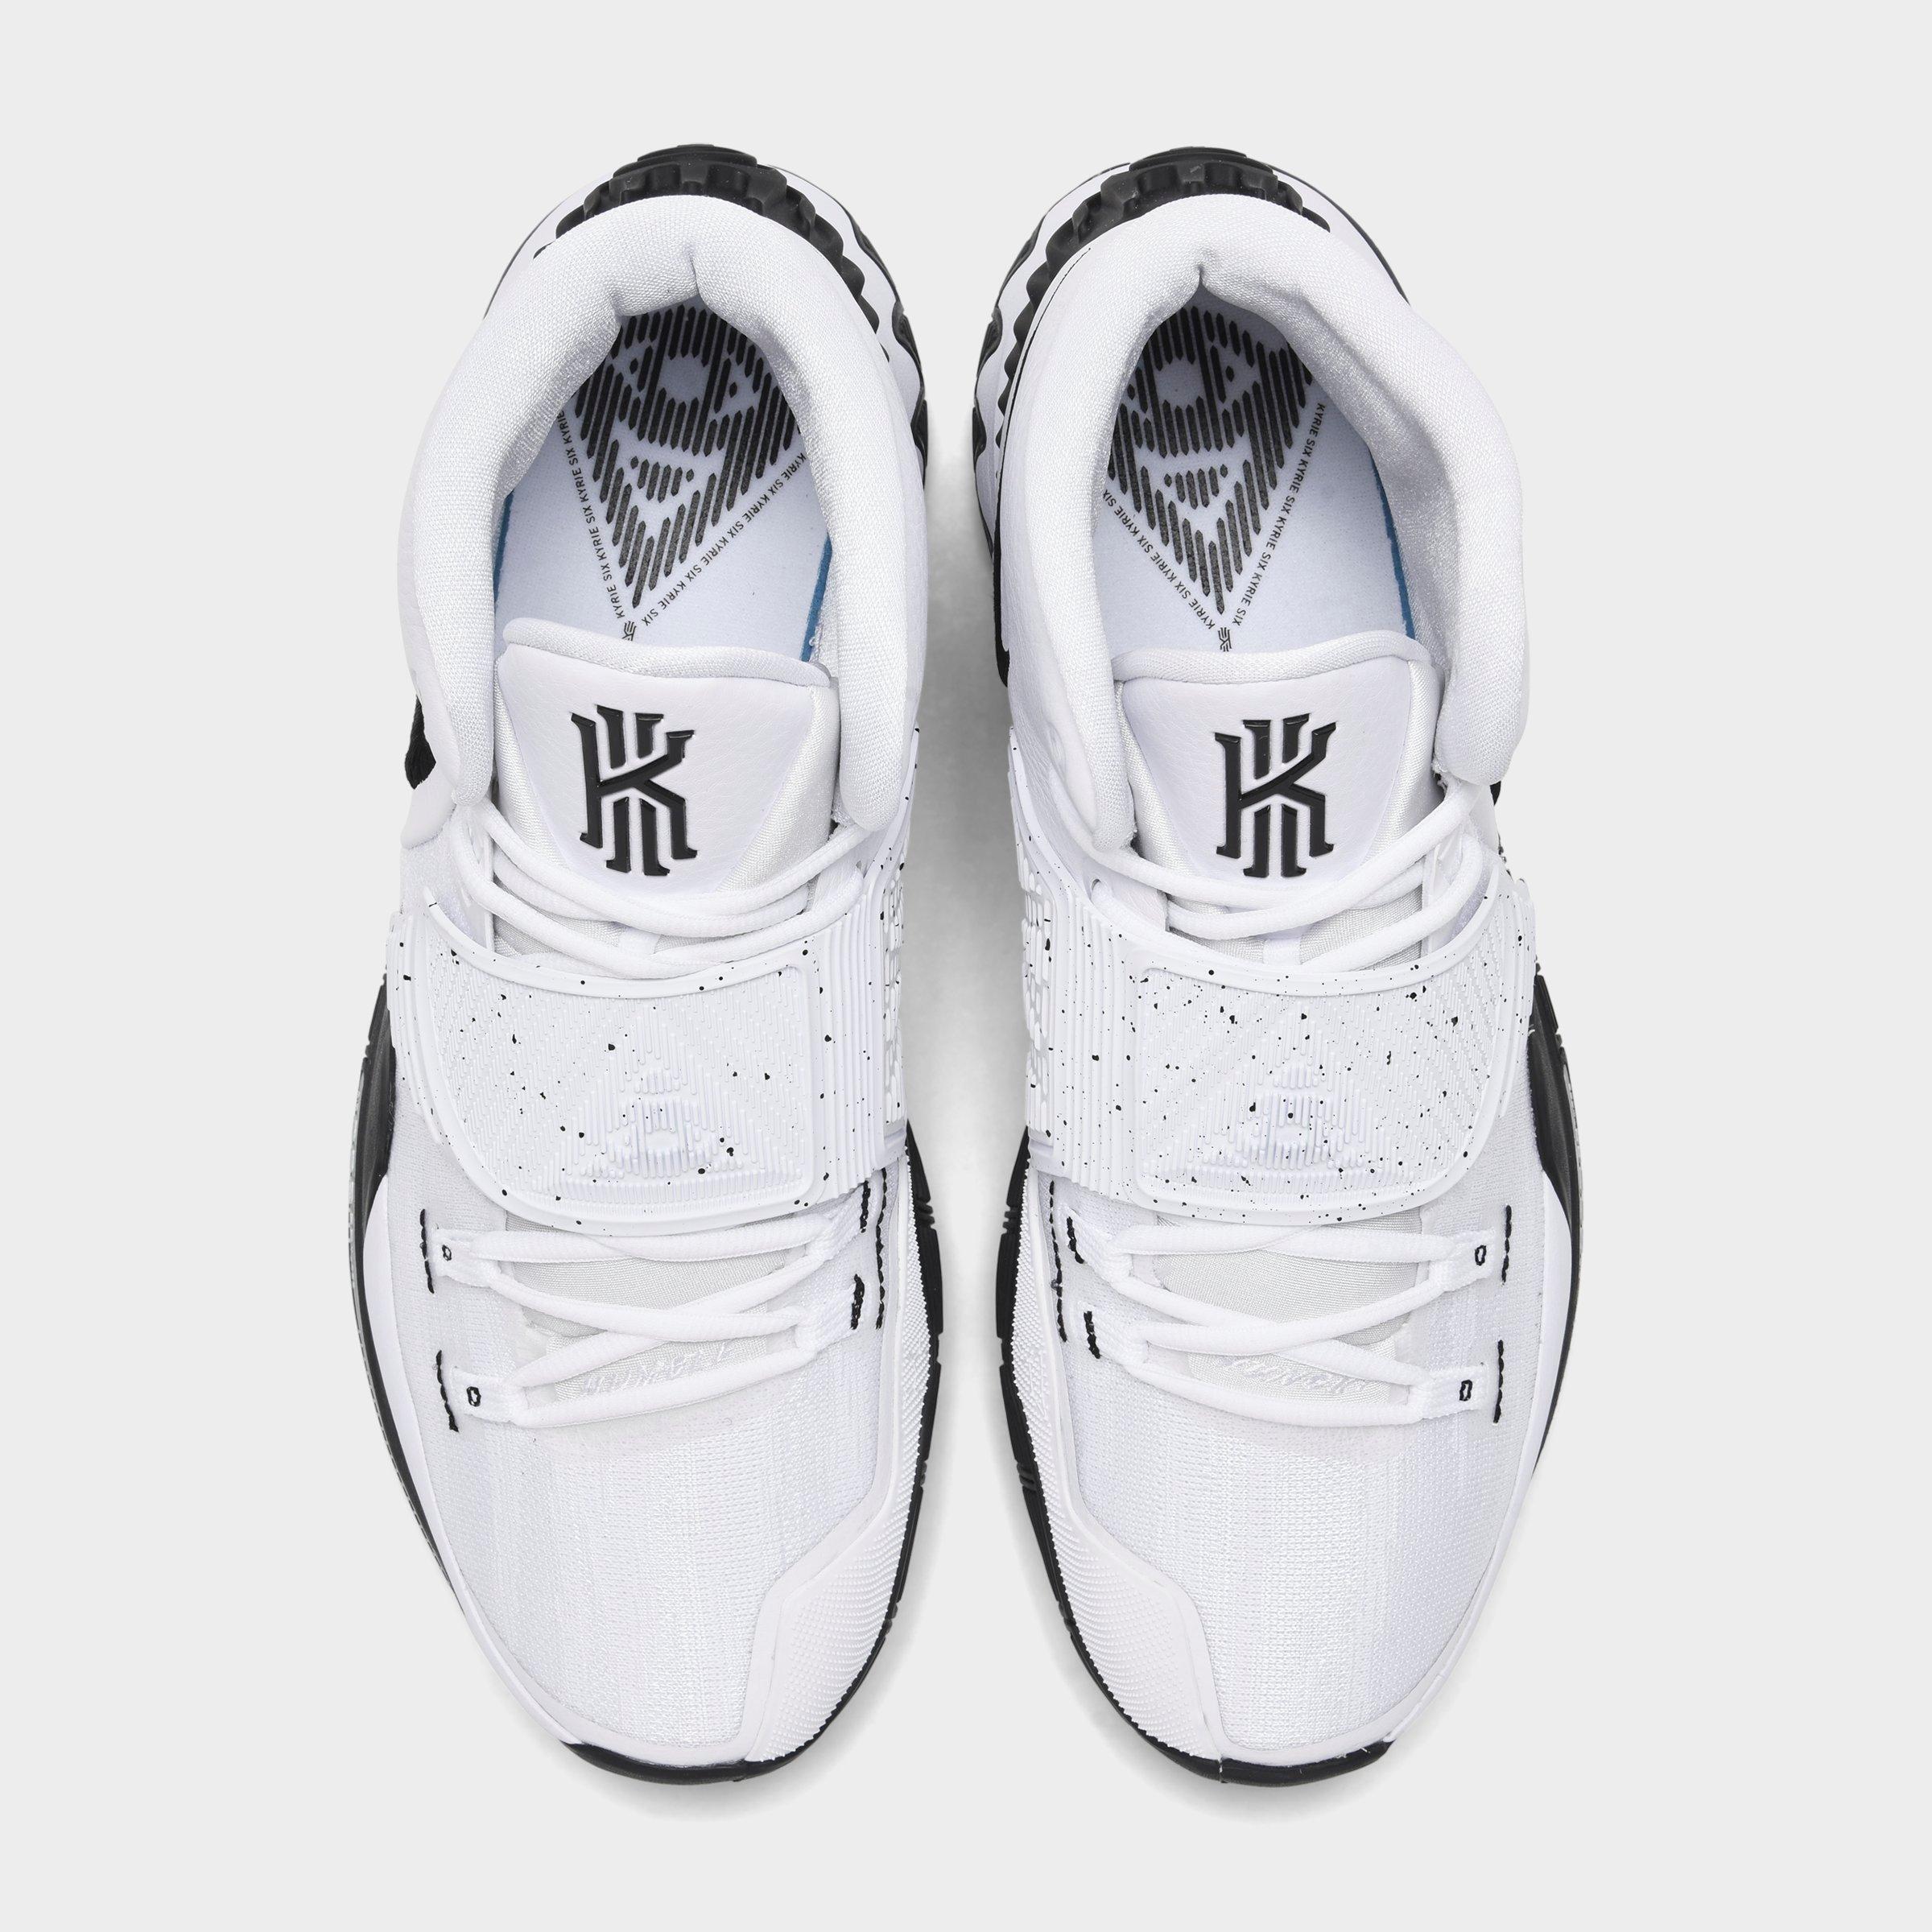 Nike Kyrie 6 'Bruce Lee' Also Releasing SneakerFiles.com